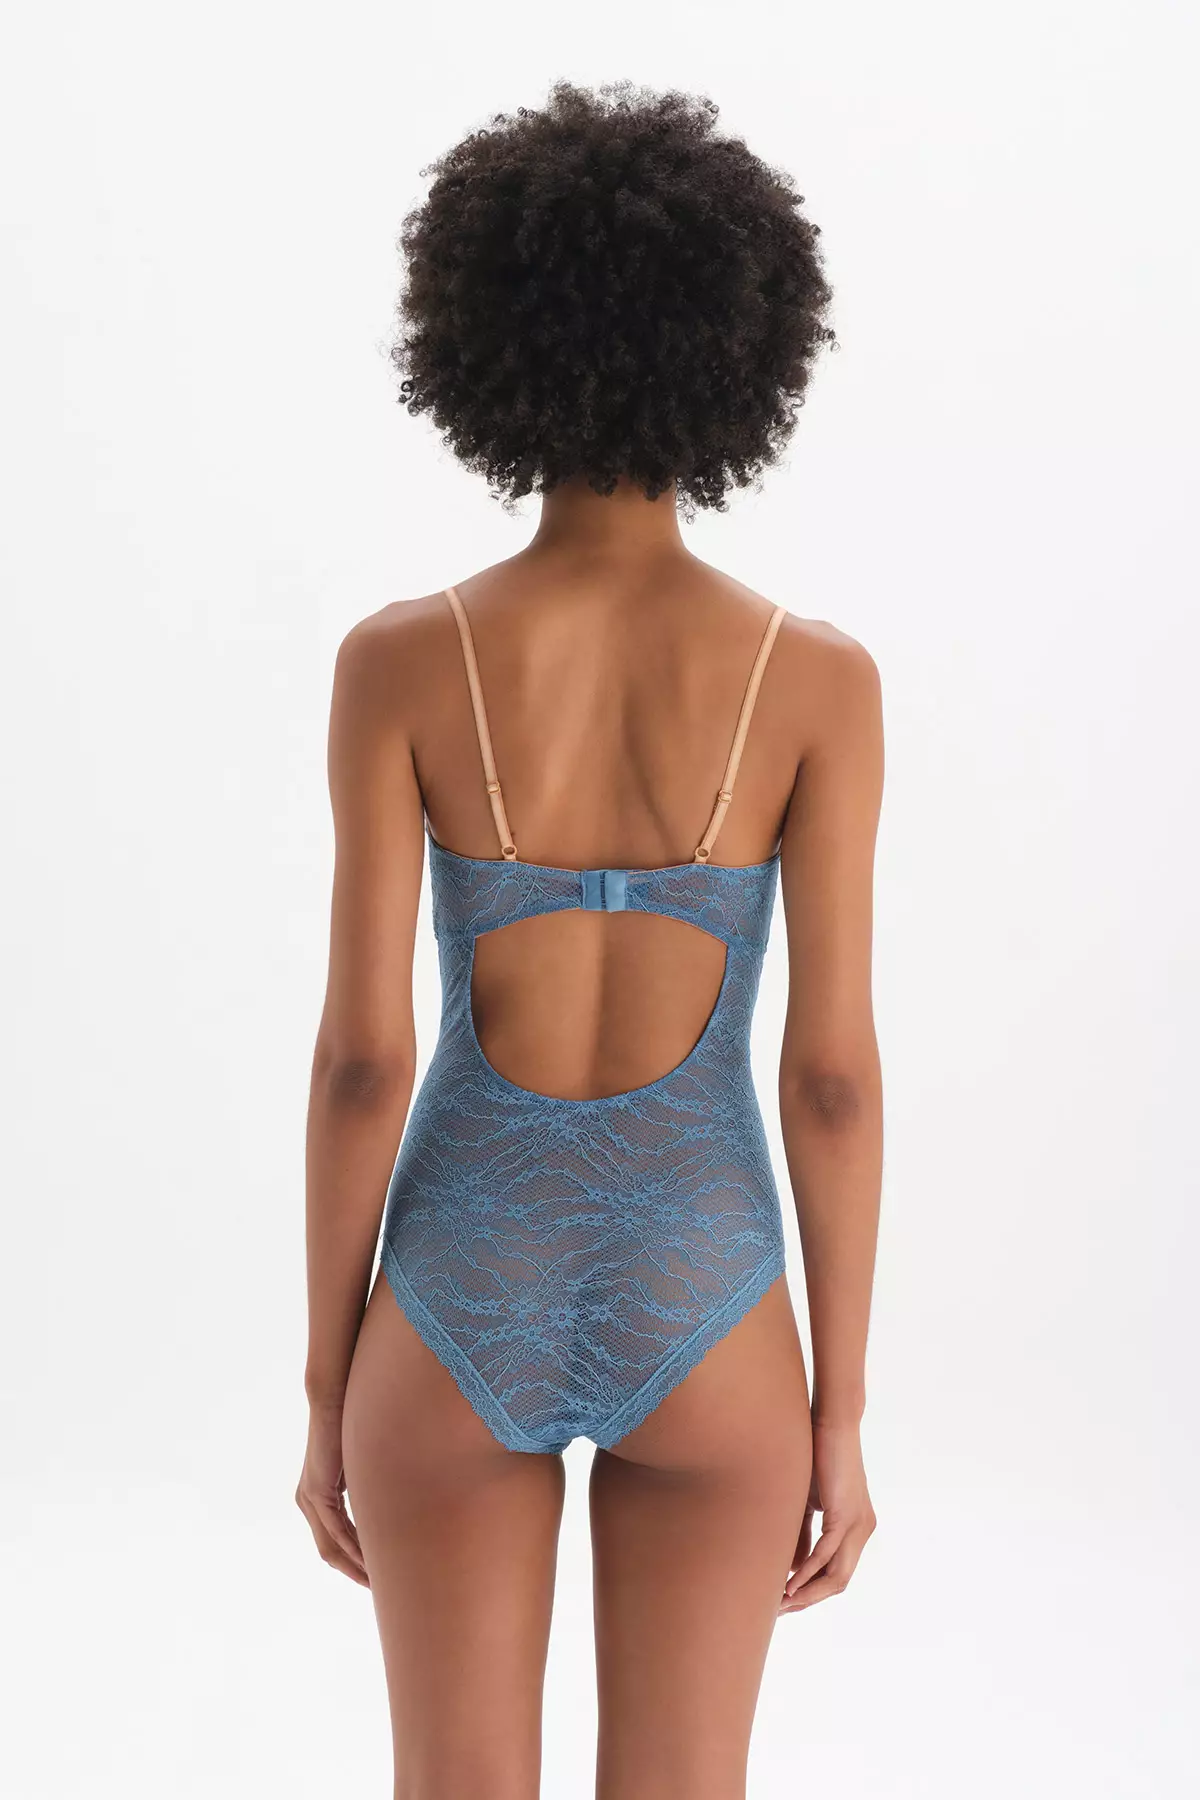 Buy DAGİ Coral Brazillian Slip, Normal Fit, Underwear for Women in